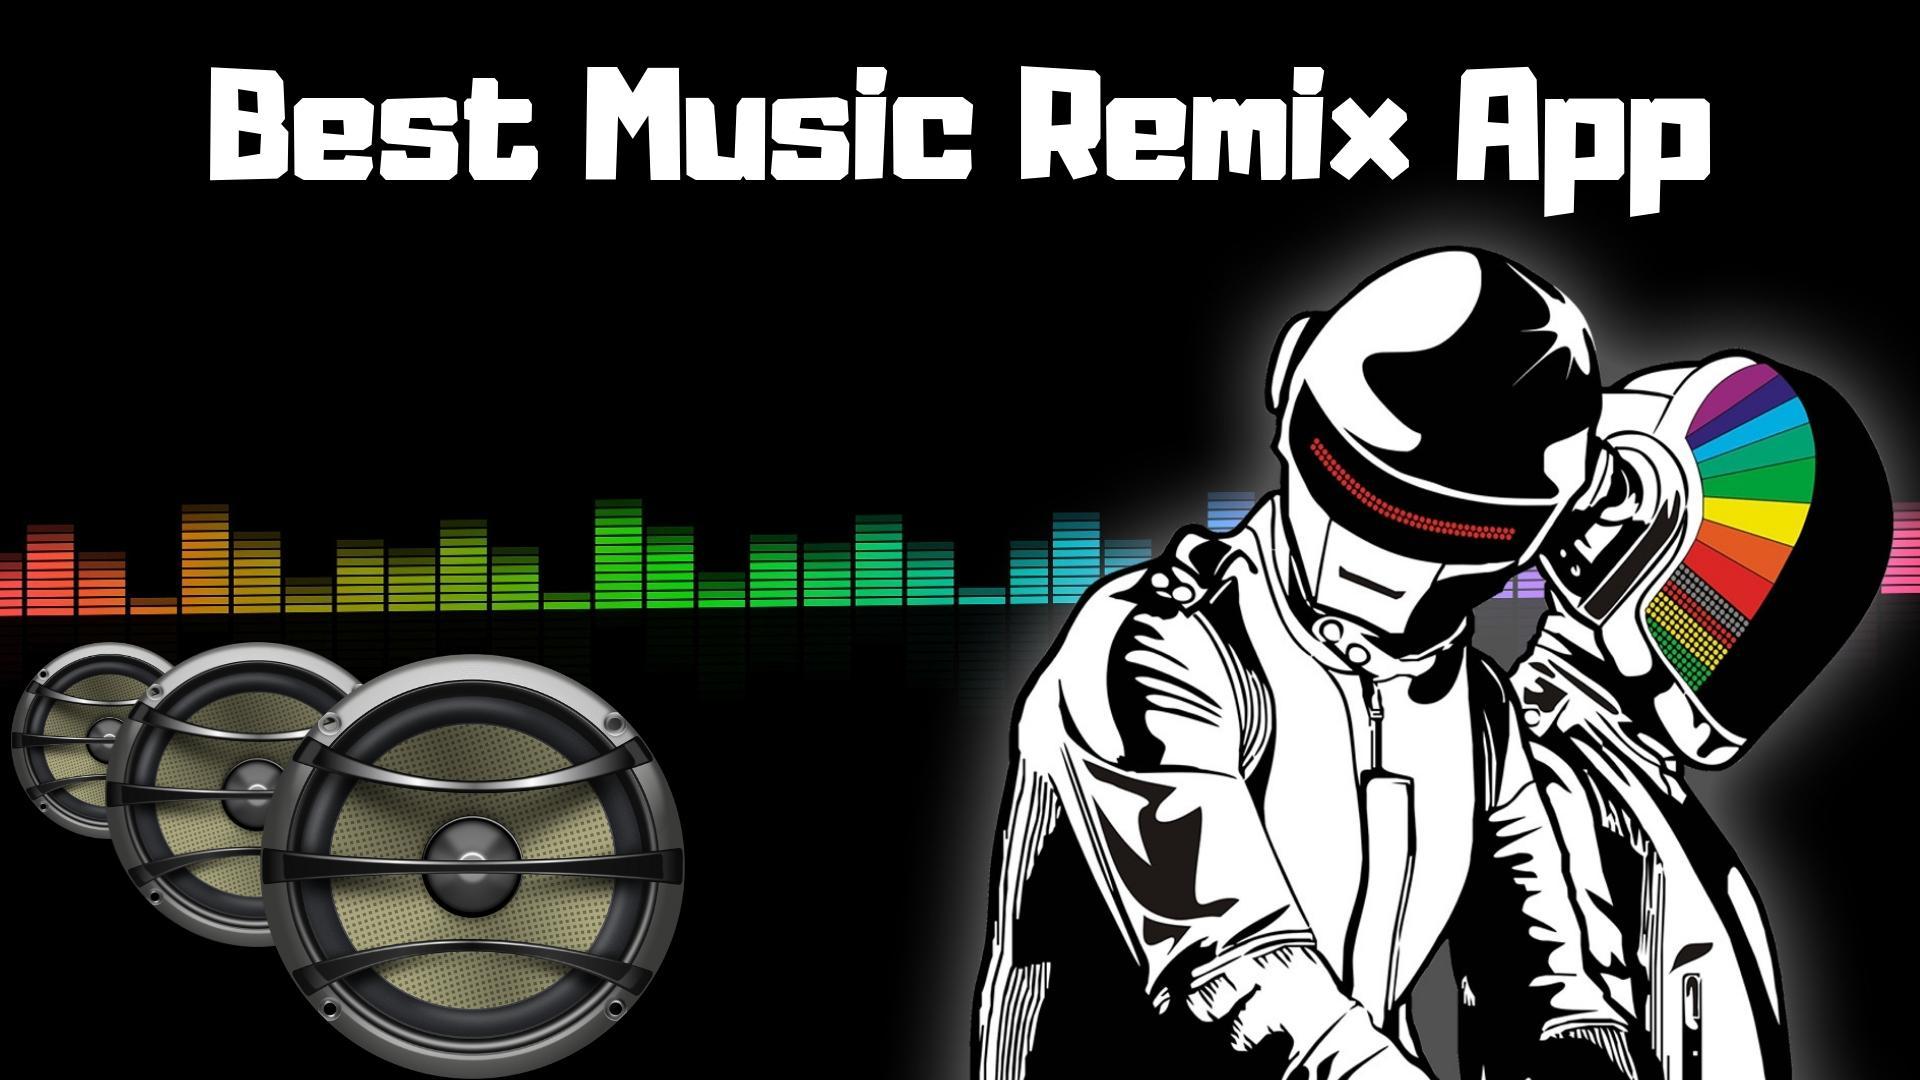 Musica remix. Best Music Remix. Обложка для ремикса. Remix Music картинка. Re Music.